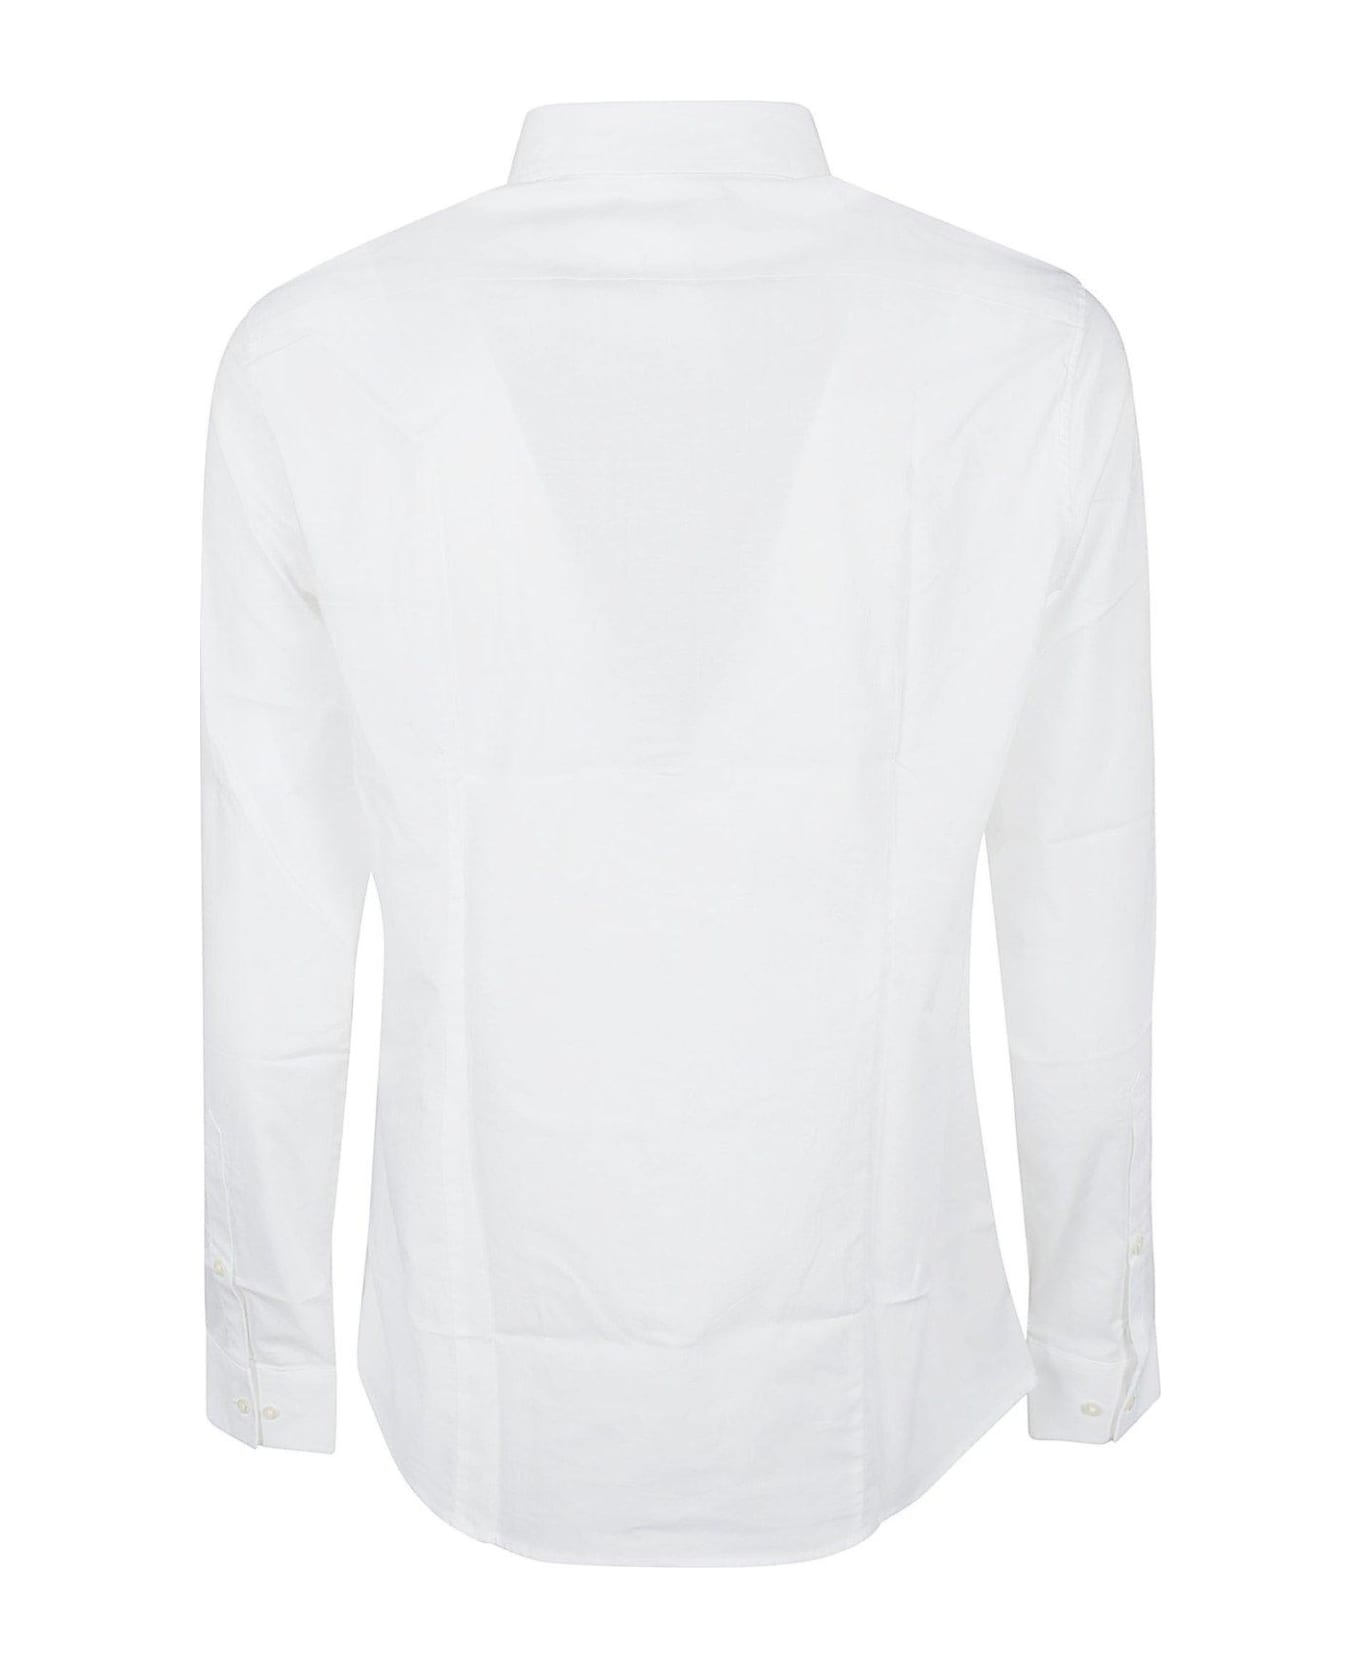 Michael Kors Slim Stretch Buttoned Long Sleeve Shirt - White